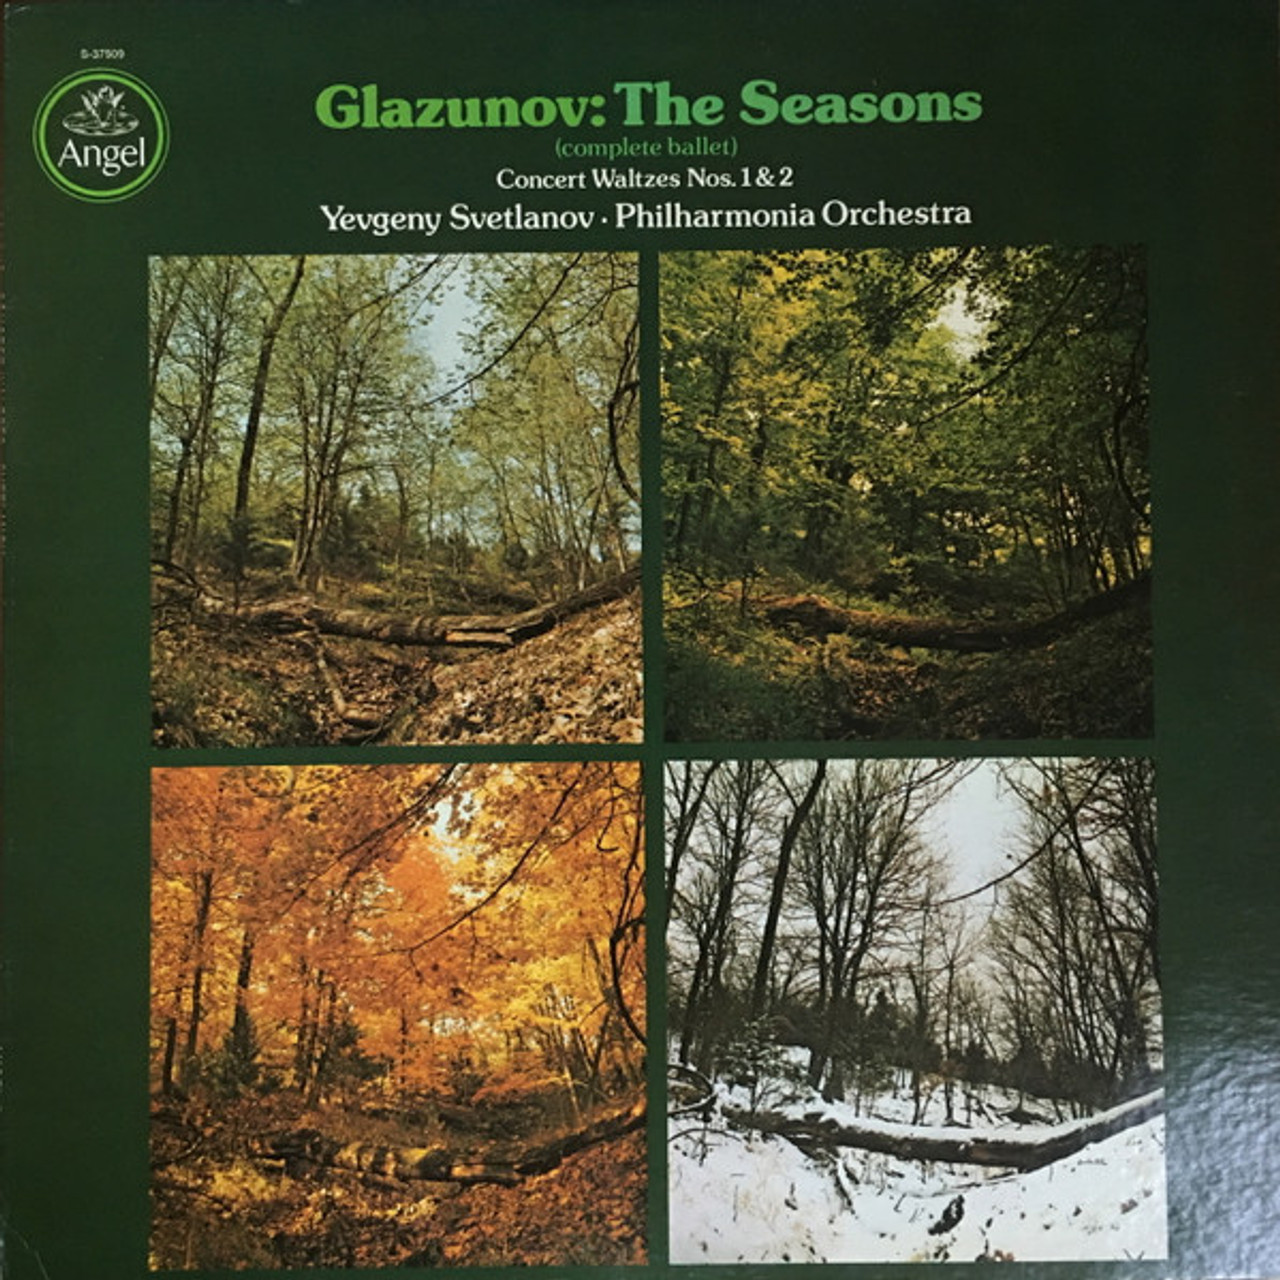 USED* The Seasons (Complete Ballet) - Glazunov, Alexander 